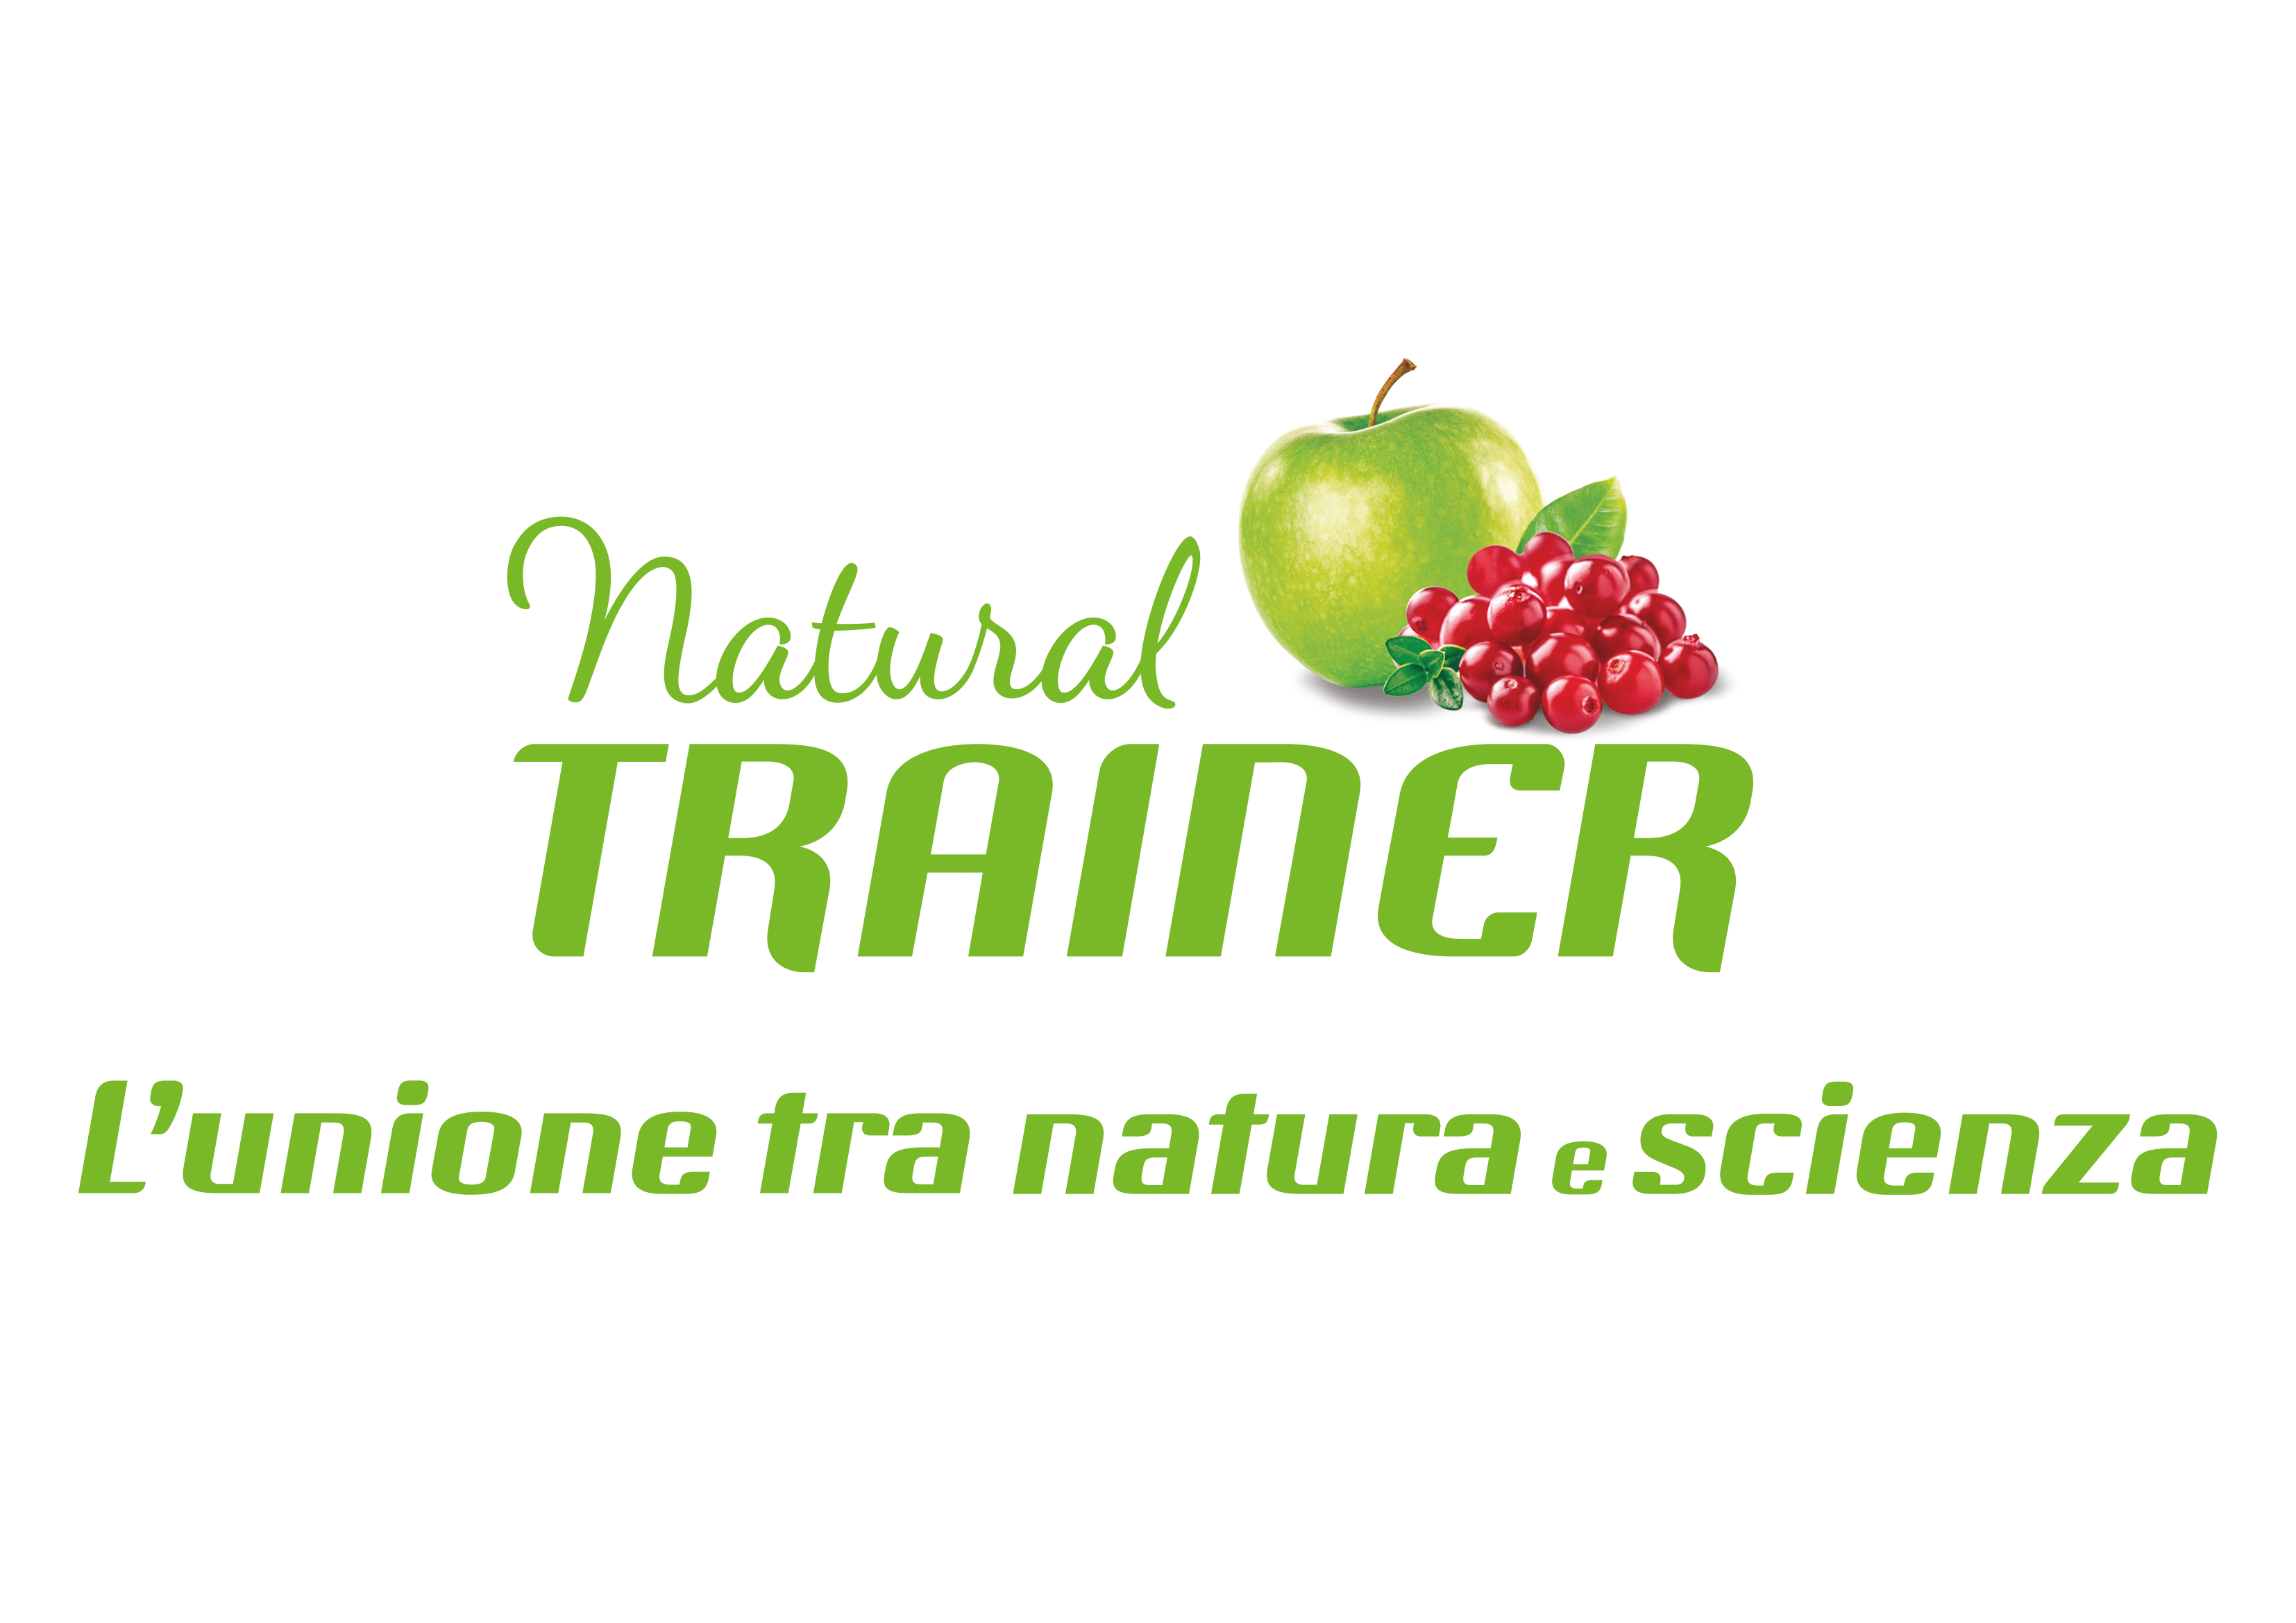 Natural Trainer 2